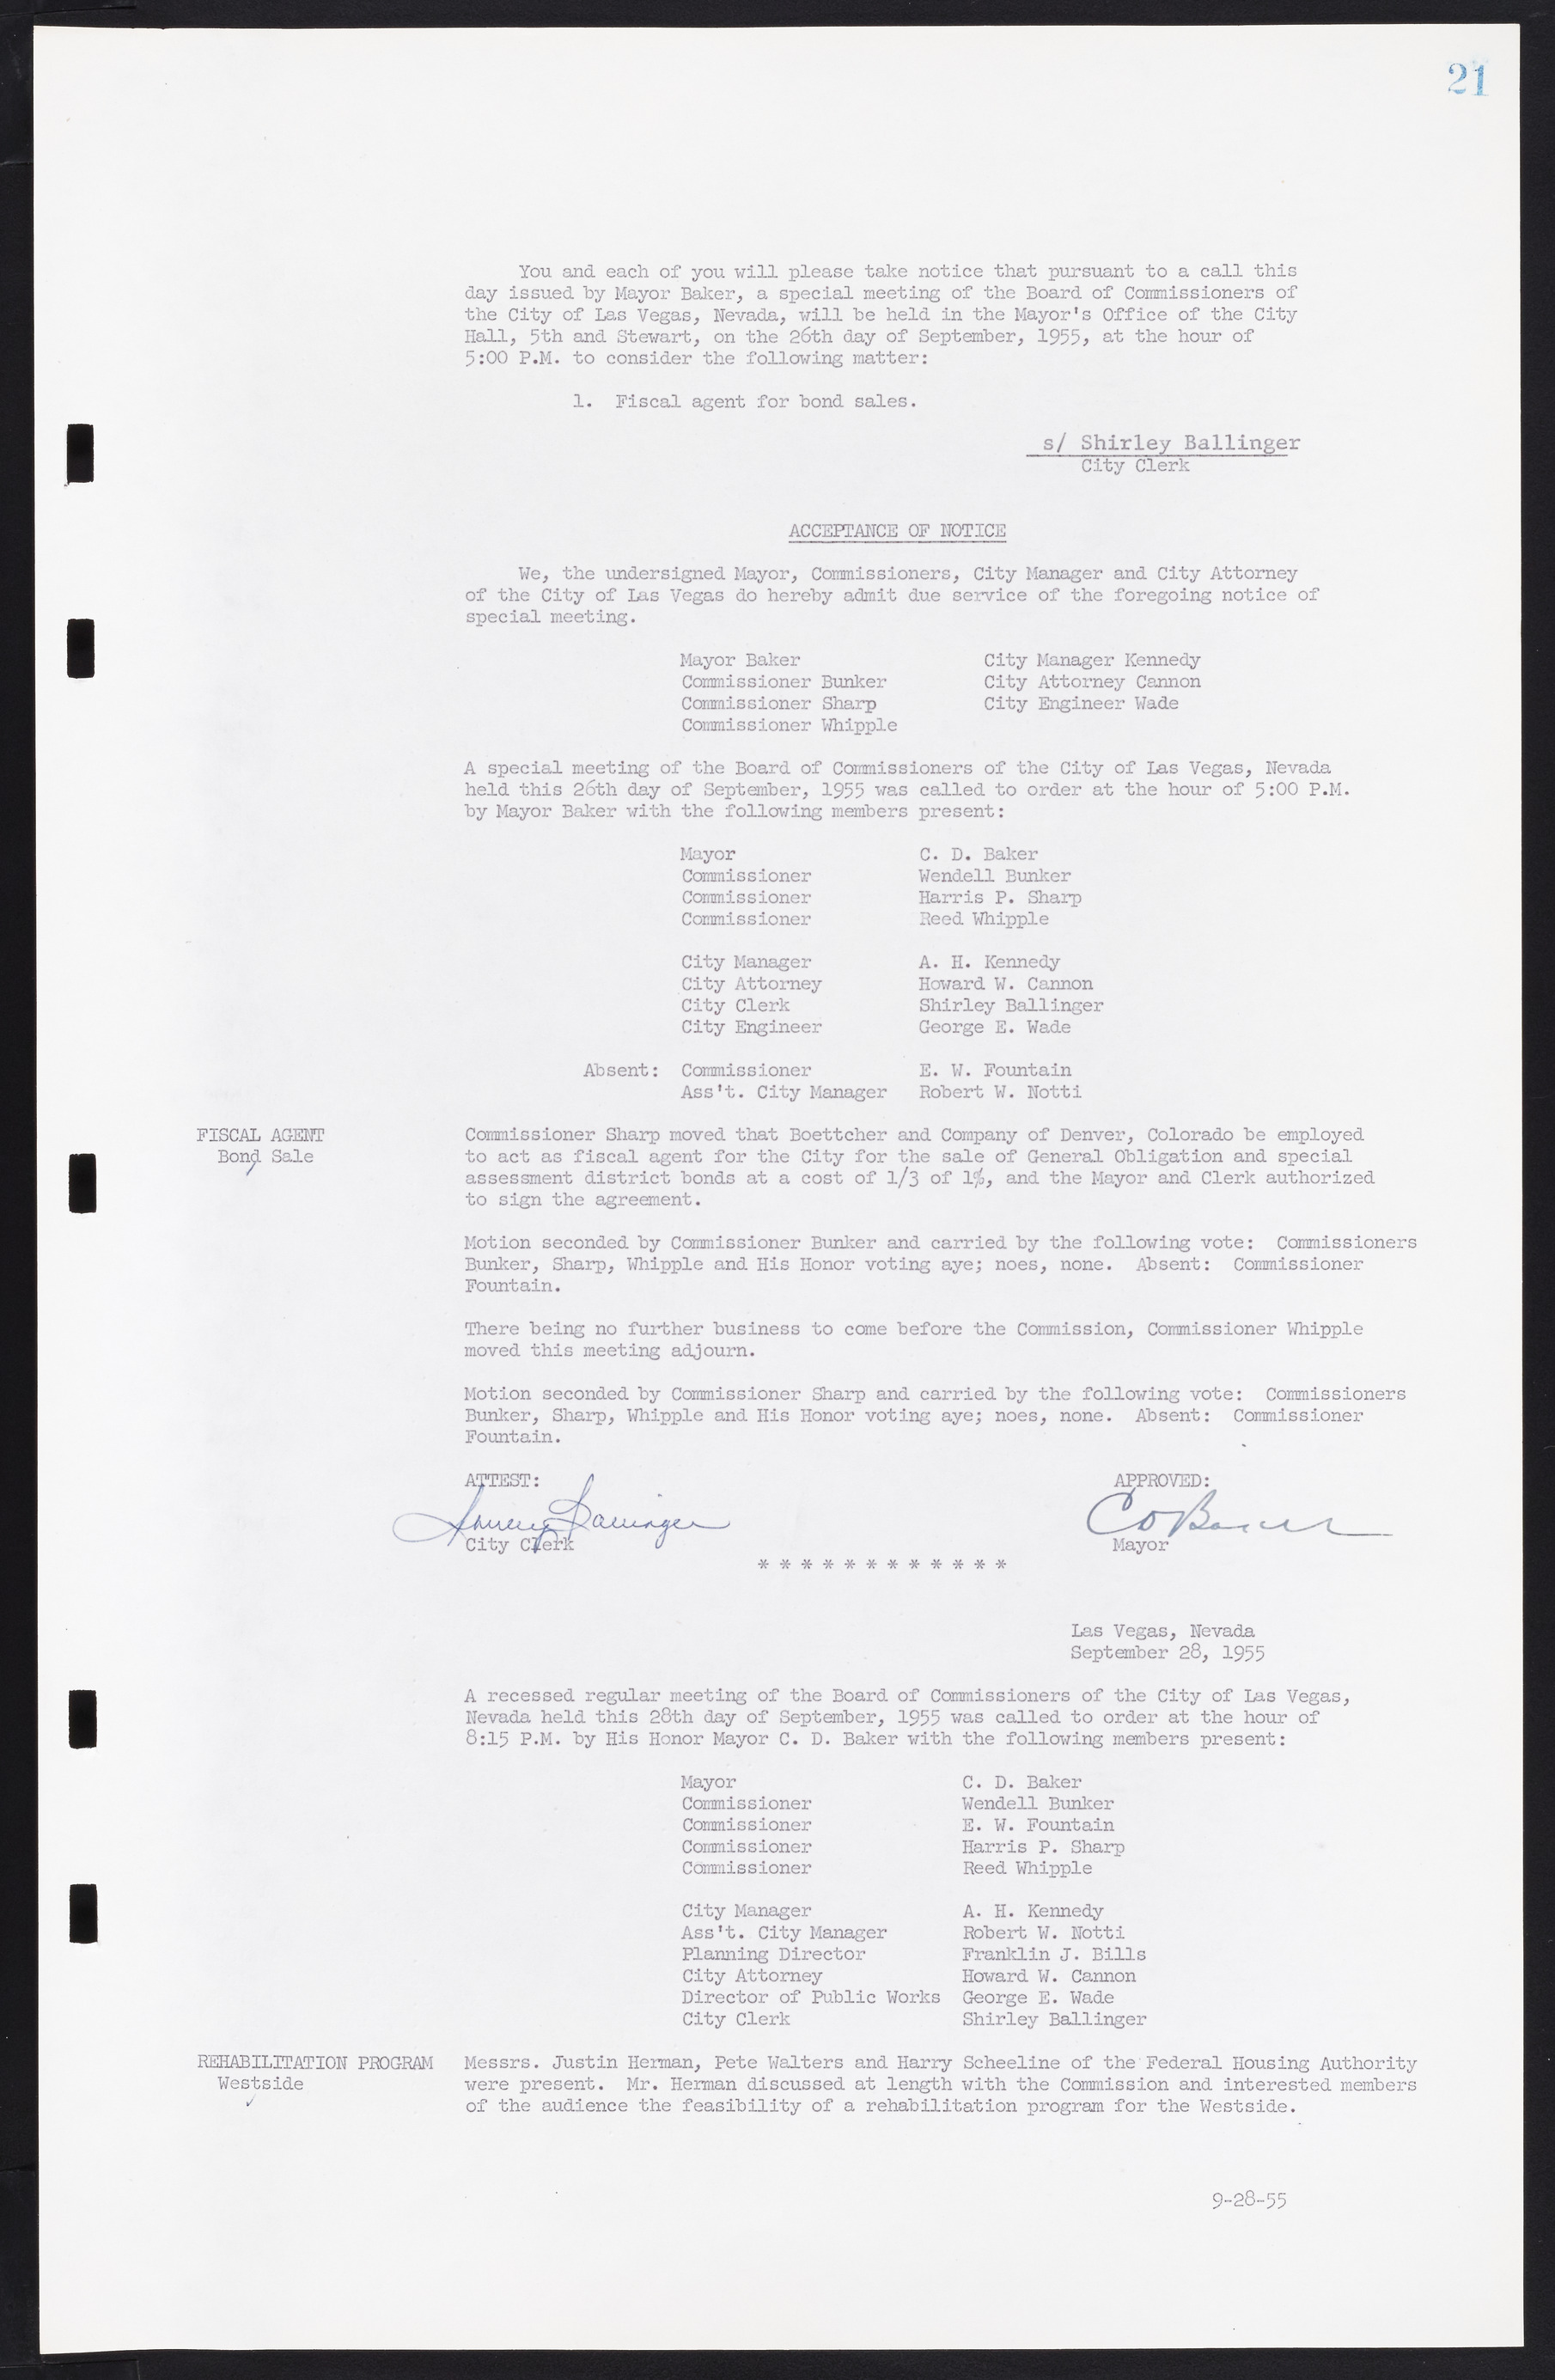 Las Vegas City Commission Minutes, September 21, 1955 to November 20, 1957, lvc000010-27